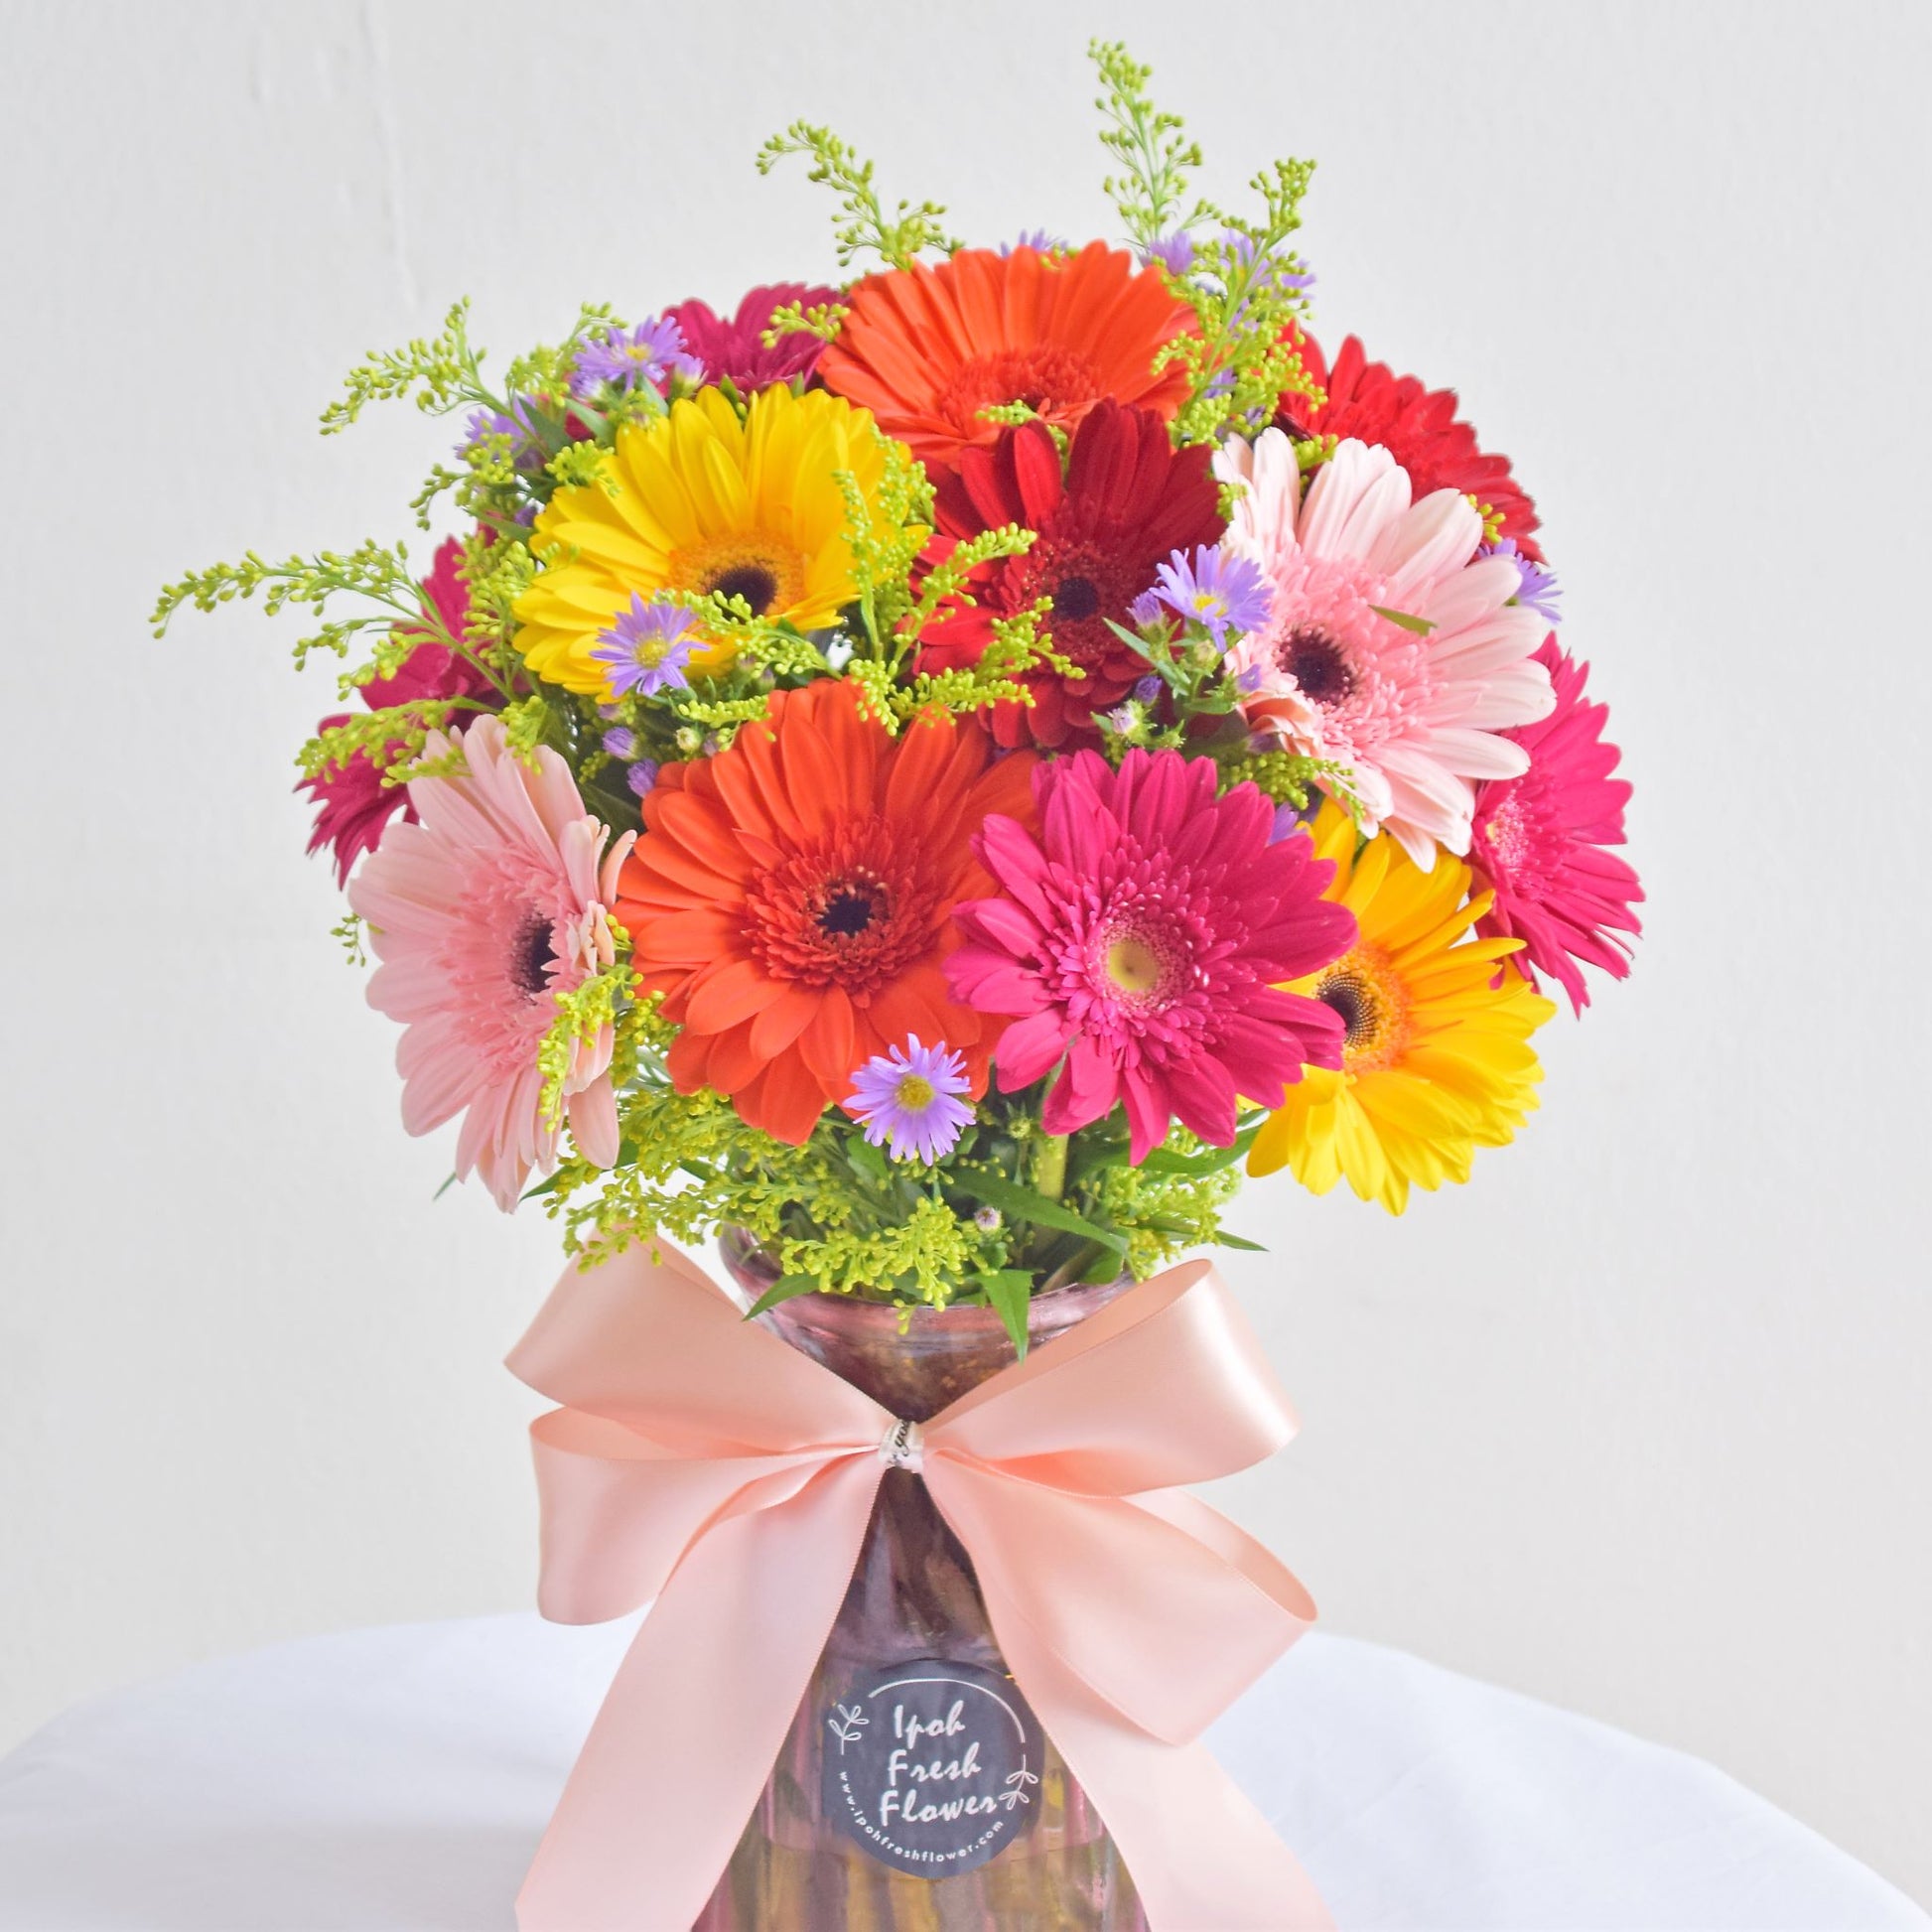 Blush Clush Daisy Vase Arrangement| Fresh Flower In Vase